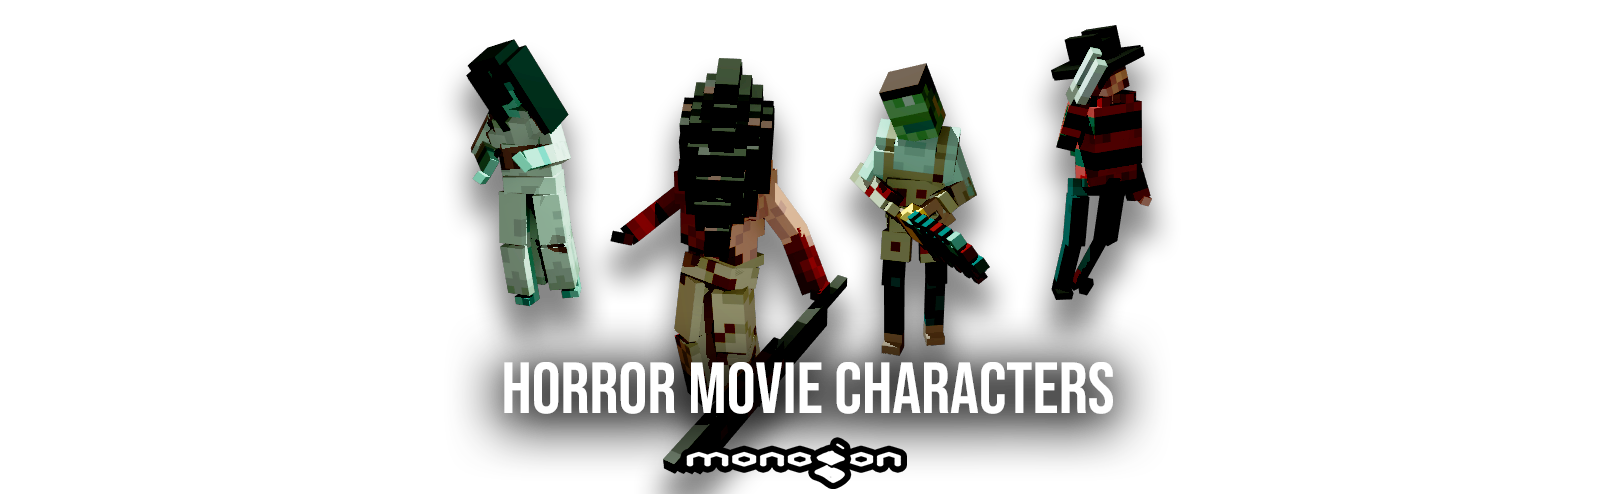 Voxel Horror Movie Characters - monogon